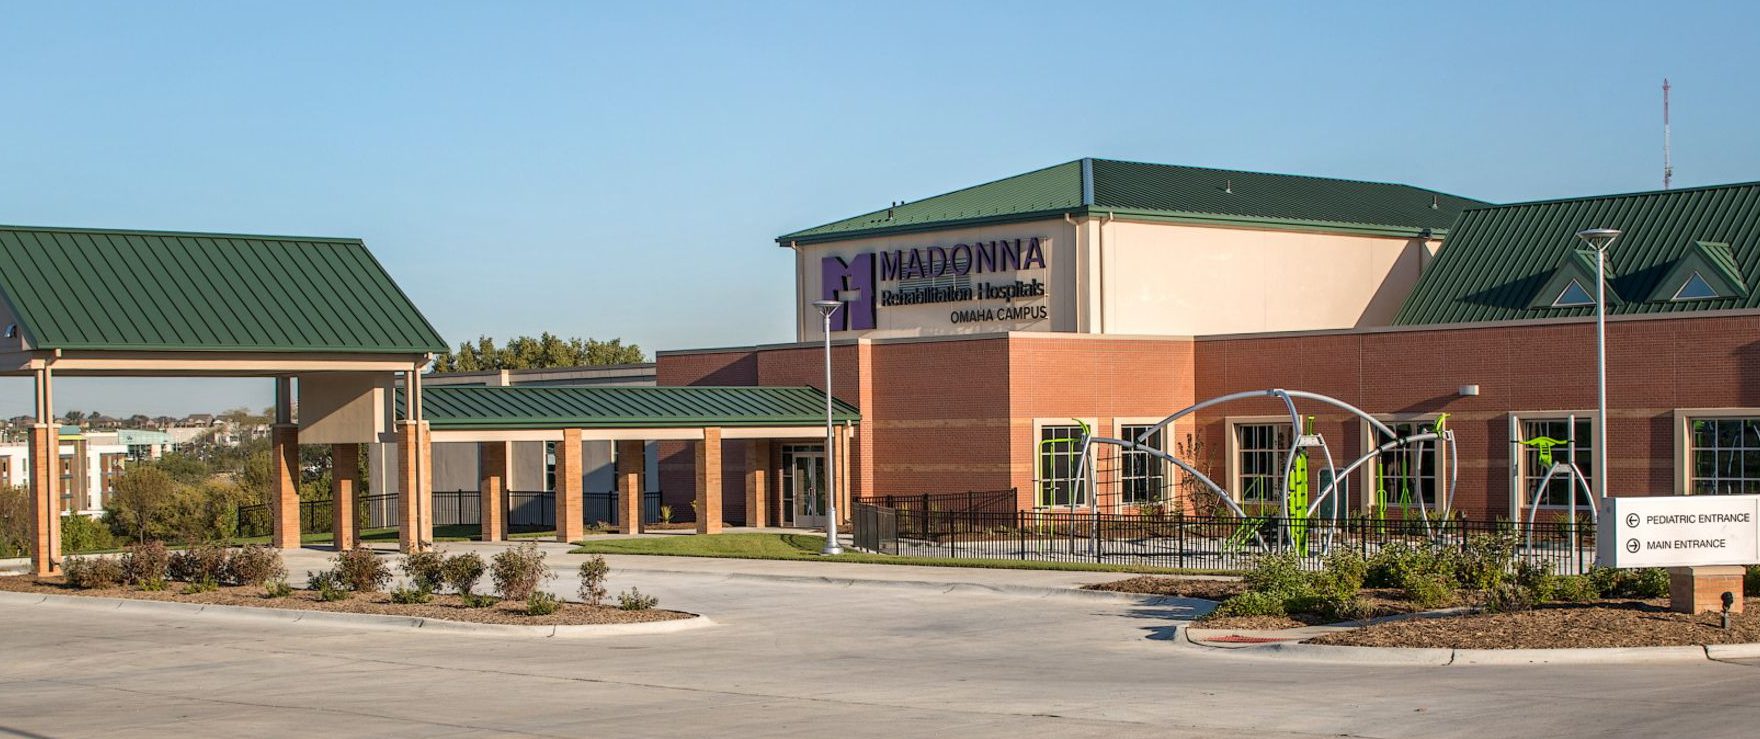 Madonna Rehabilitation Hospitals Projects